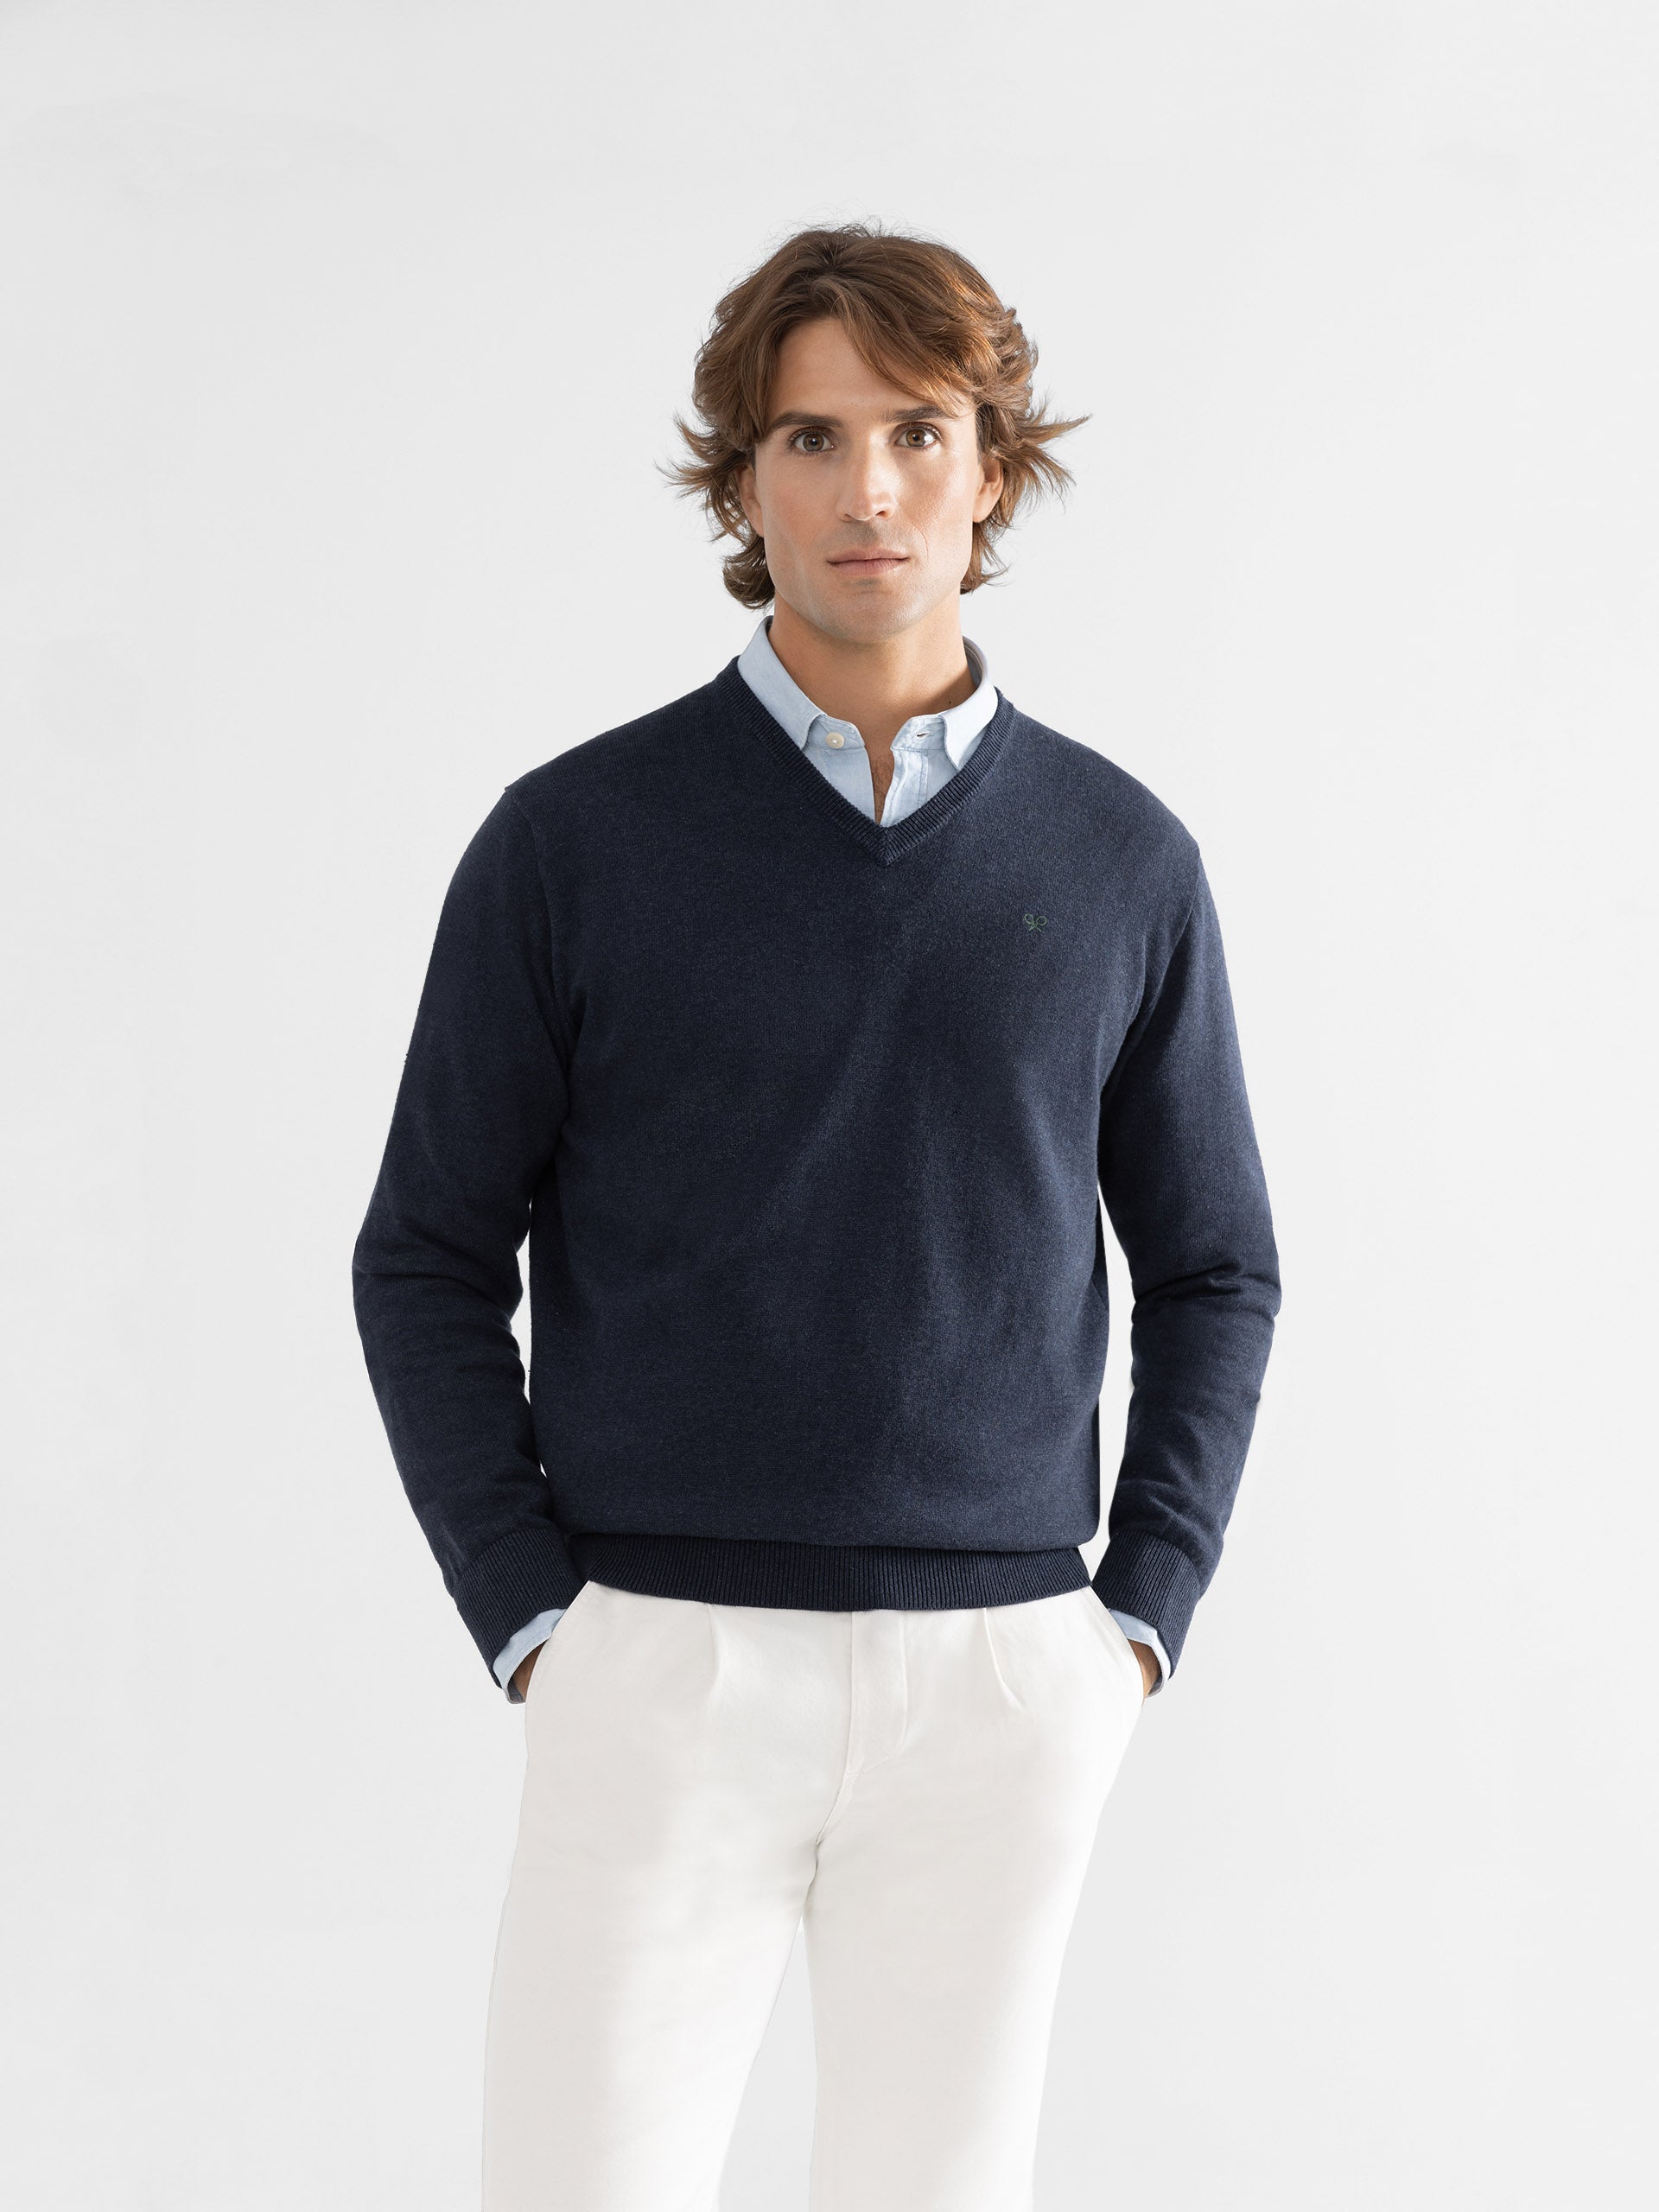 Plain navy blue elbow sleeve sweater